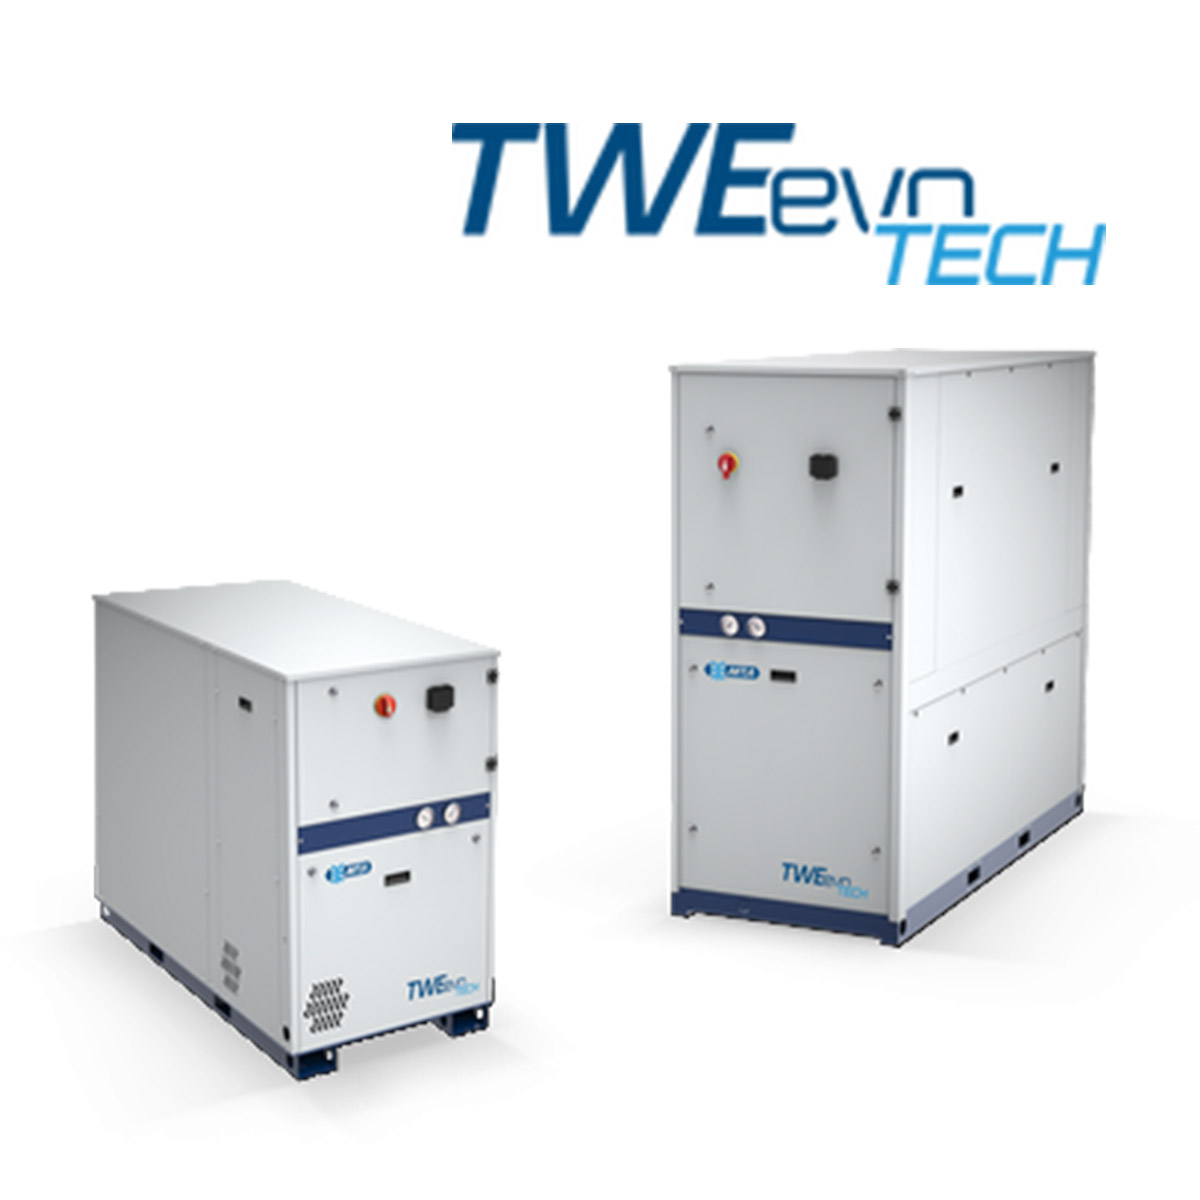 TWEevo Tech